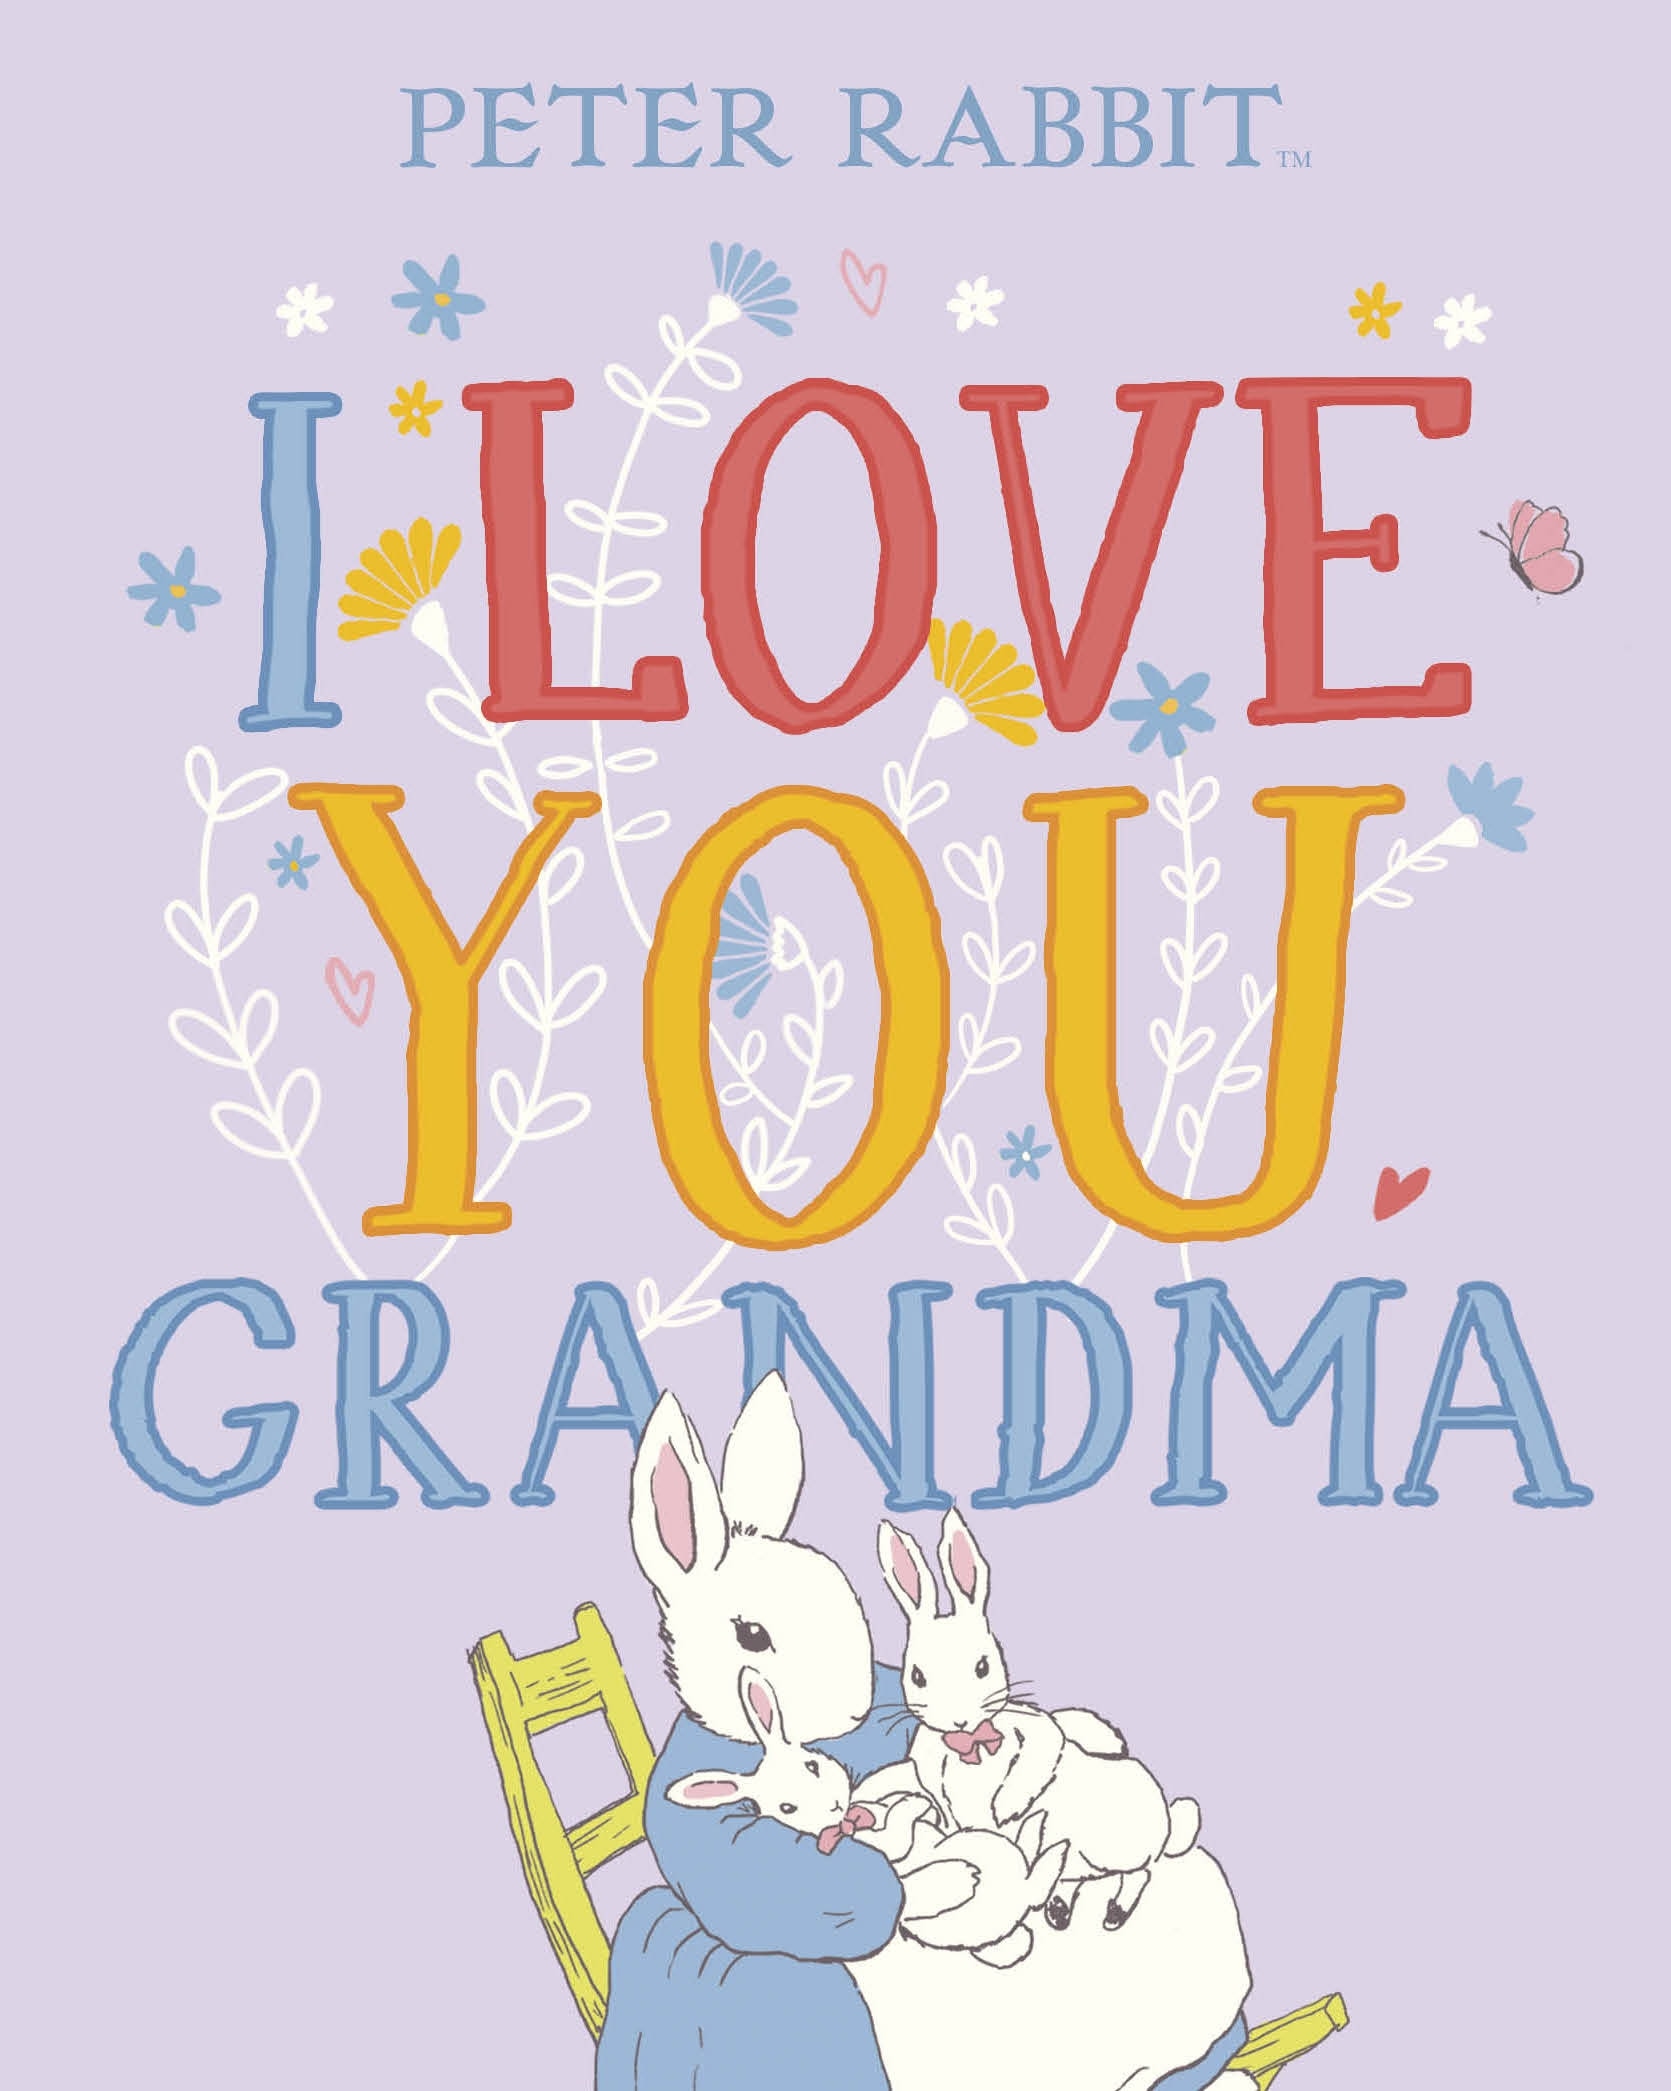 Book “Peter Rabbit I Love You Grandma” by Beatrix Potter — February 3, 2022